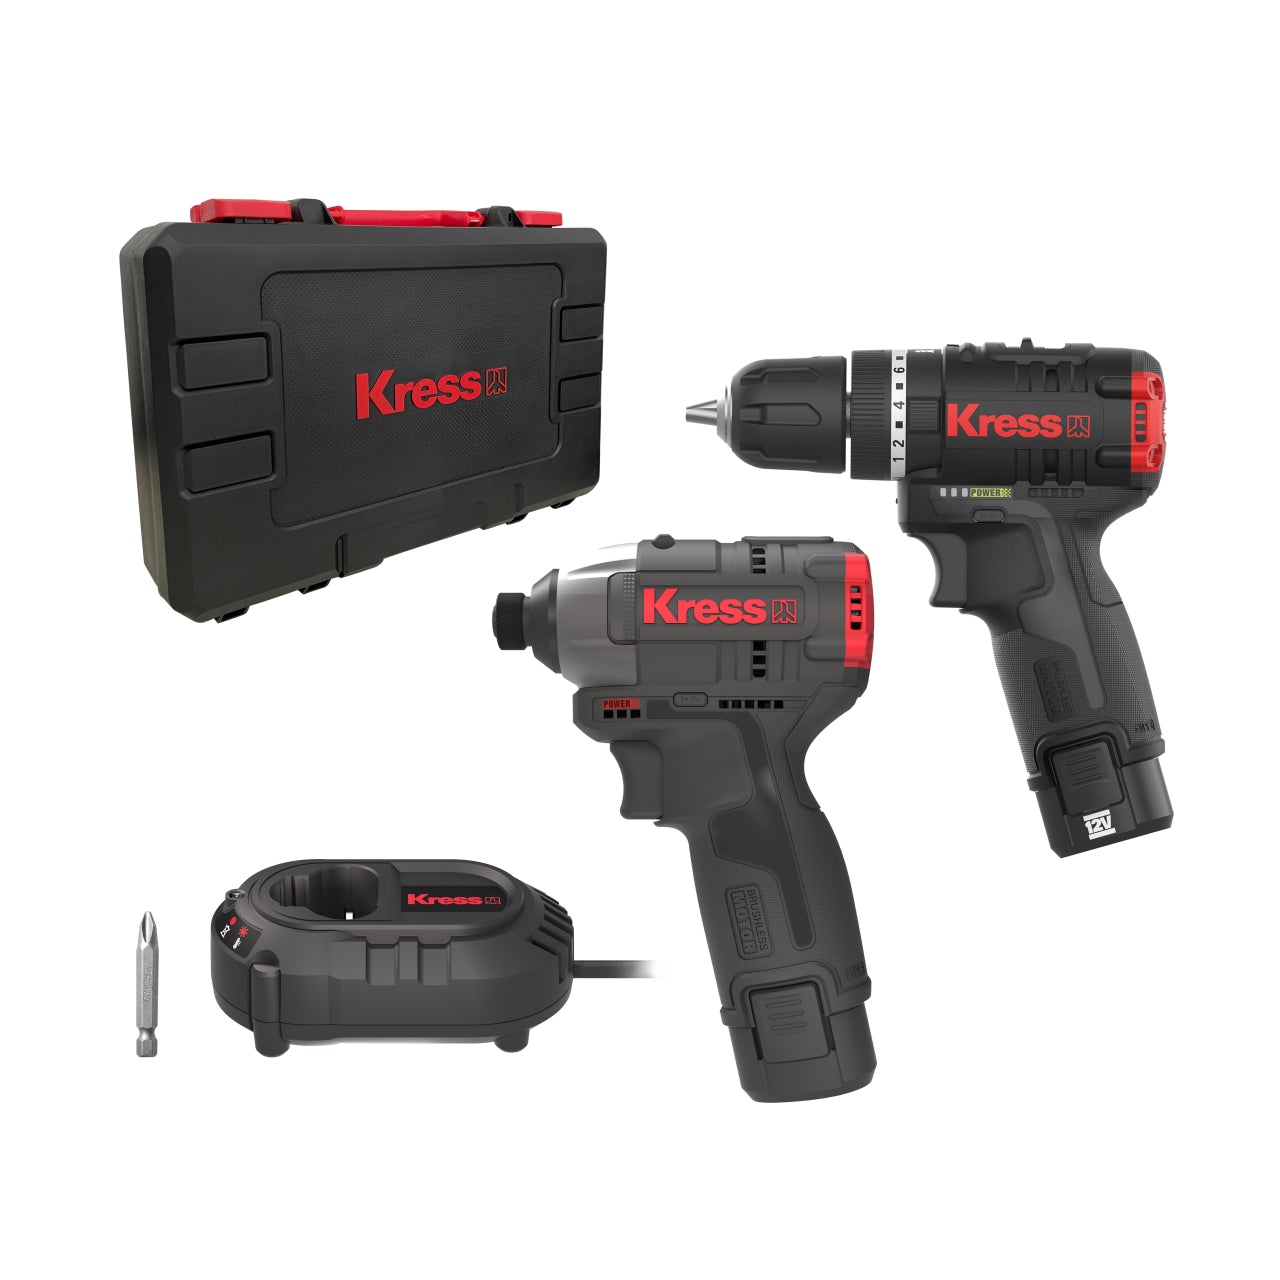 Kress | Cordless Drill & Driver Combo 12v | KUG02